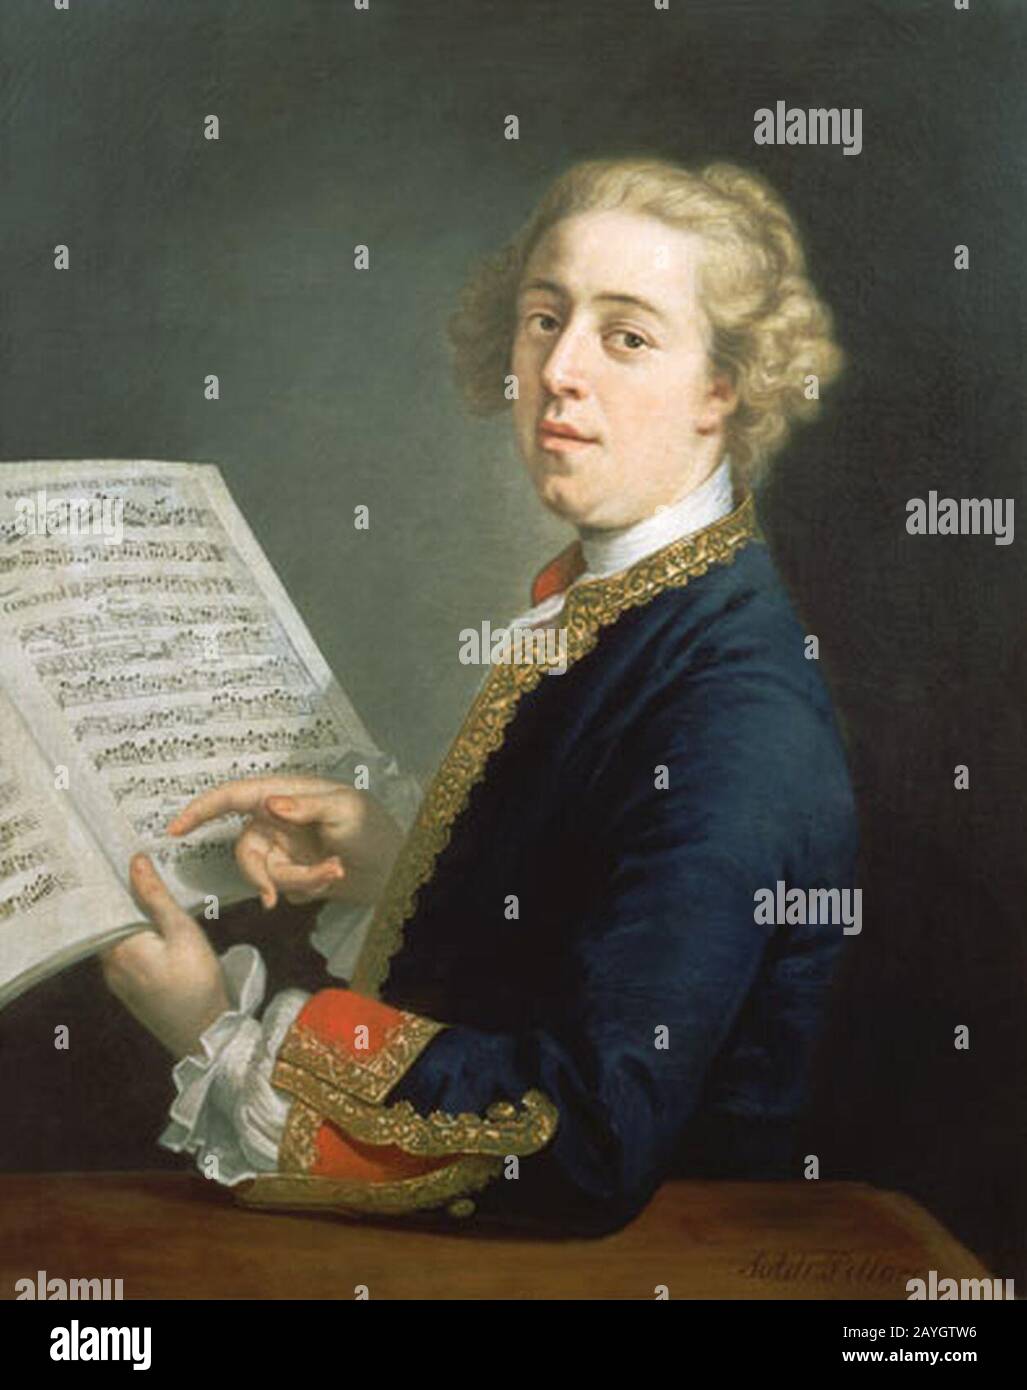 Francesco Saverio Geminiani (1687.12.5.-1762.9.17) italienischer Geiger Komponist Musiktheoretiker. Stockfoto